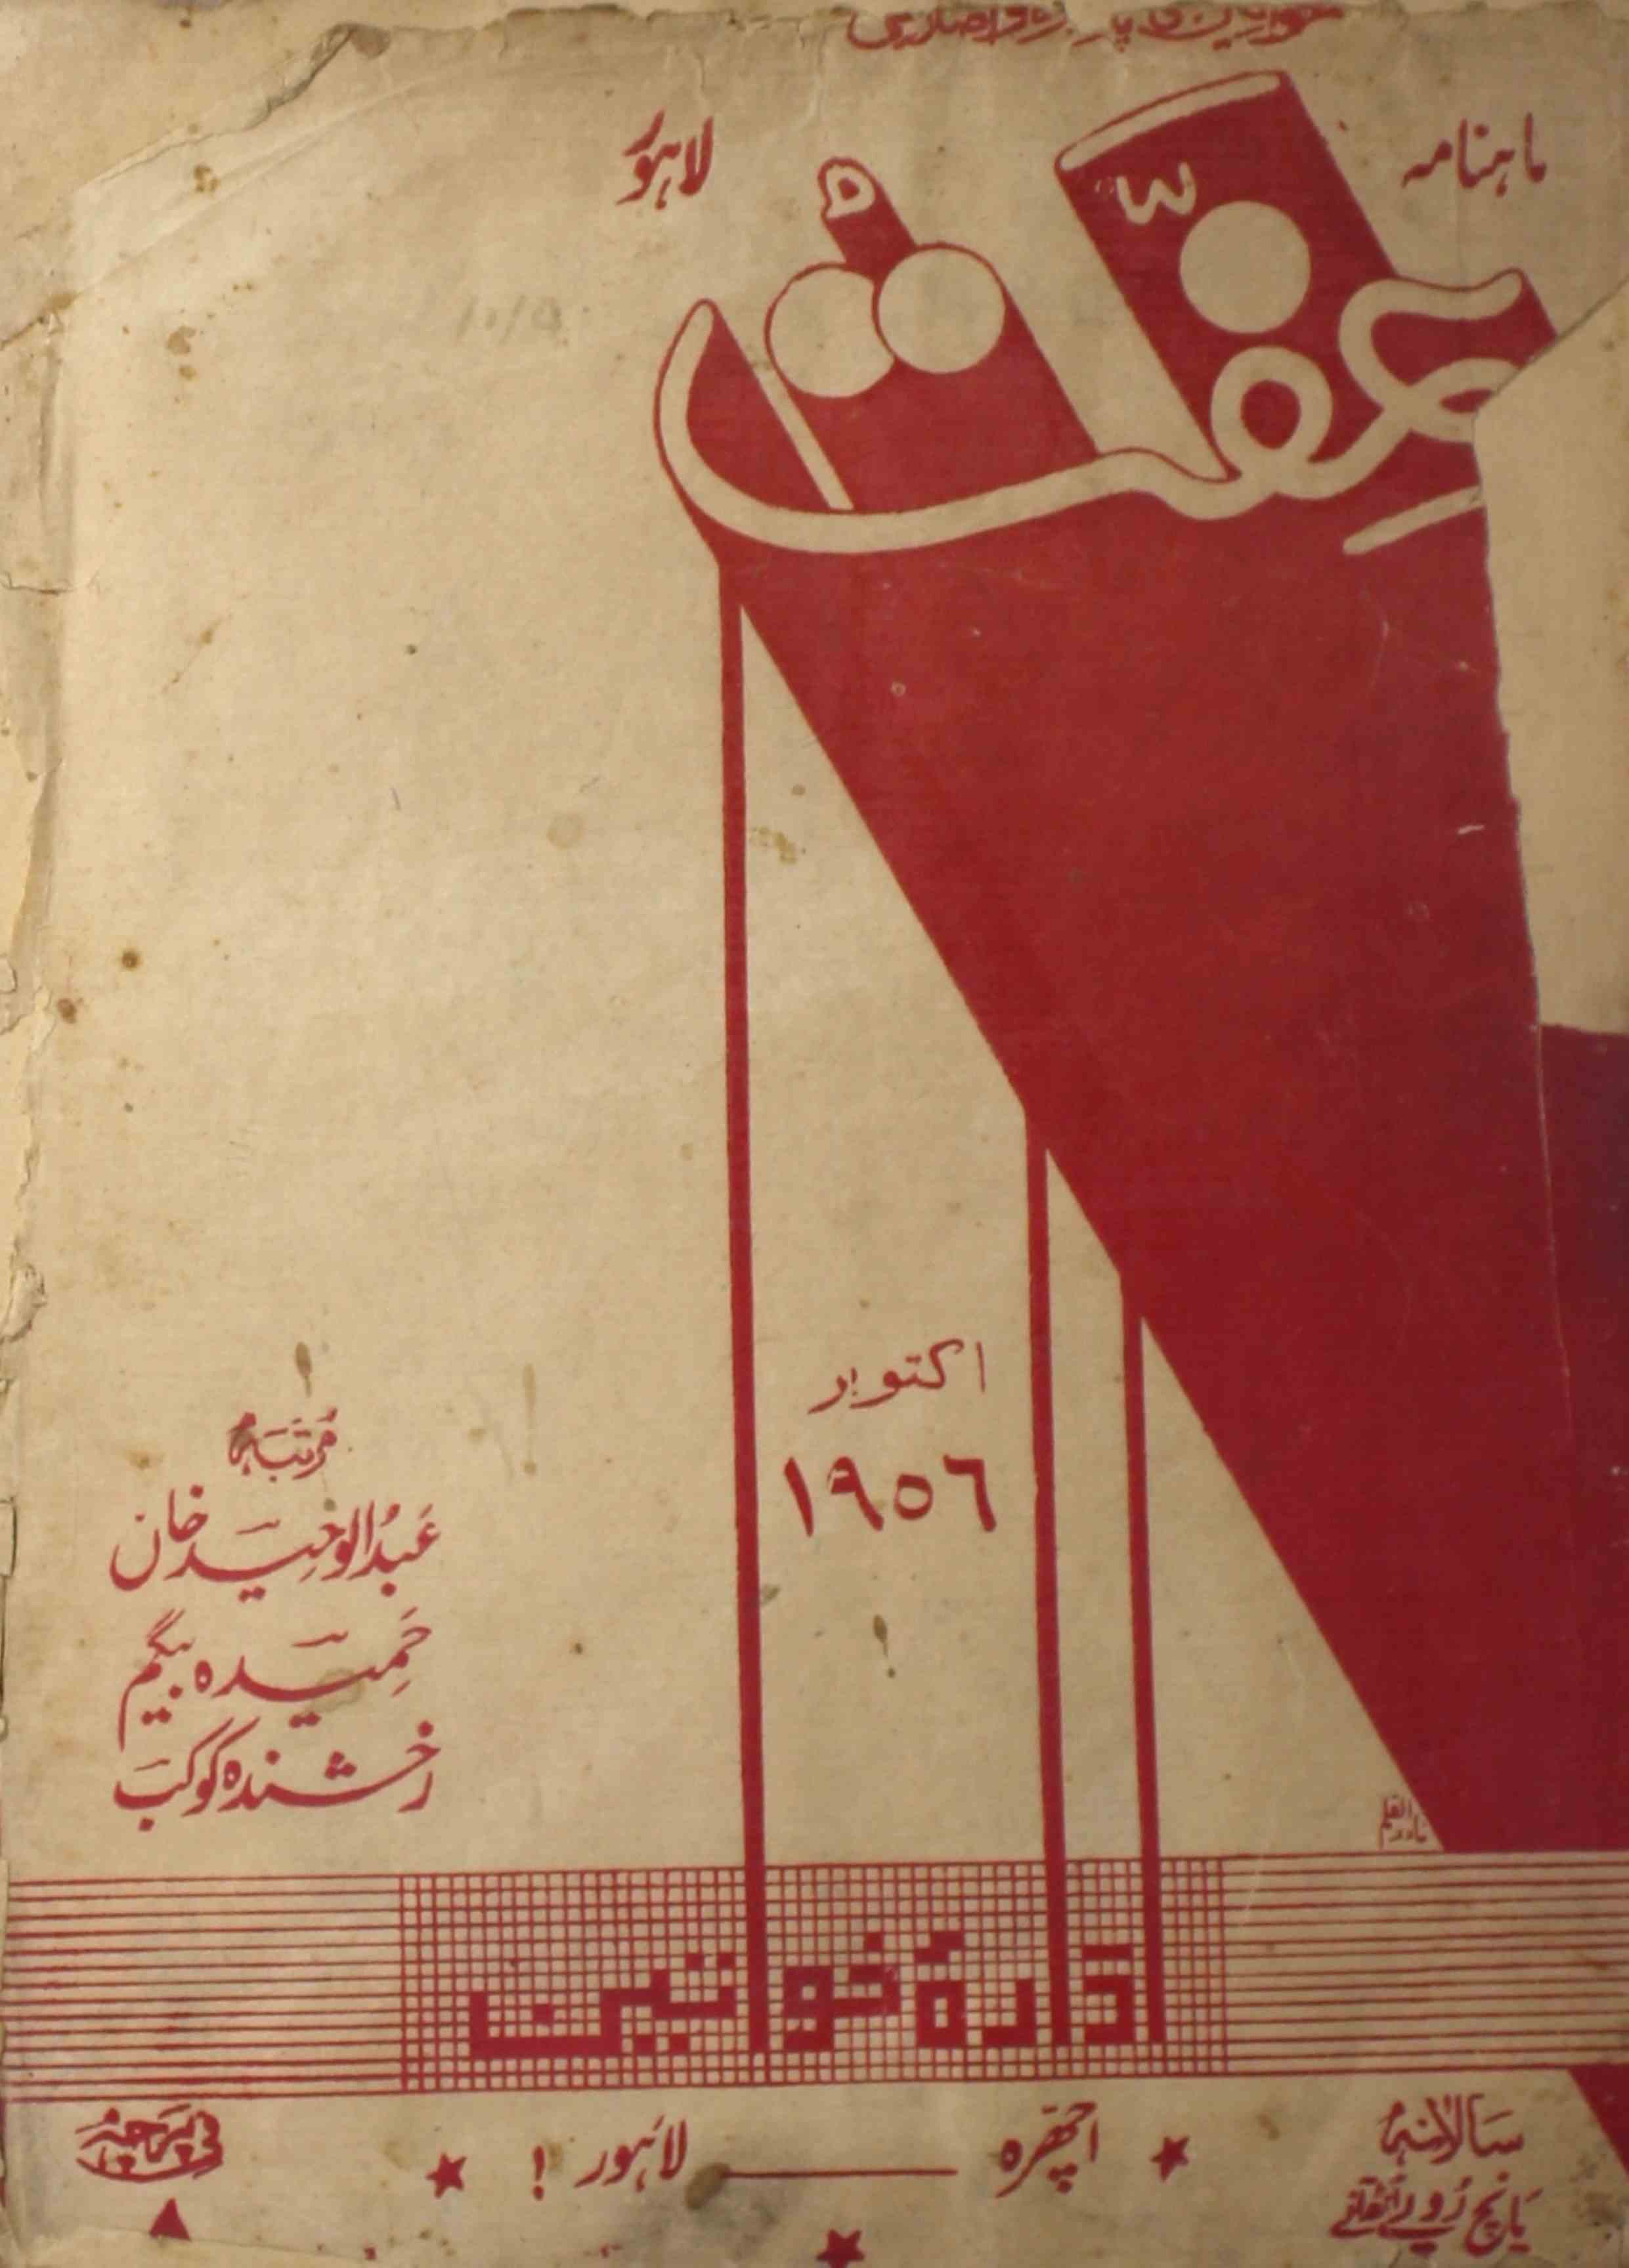 Afat Jild 3 Shumara 4 October 1956-Svk-Shumara Number-004